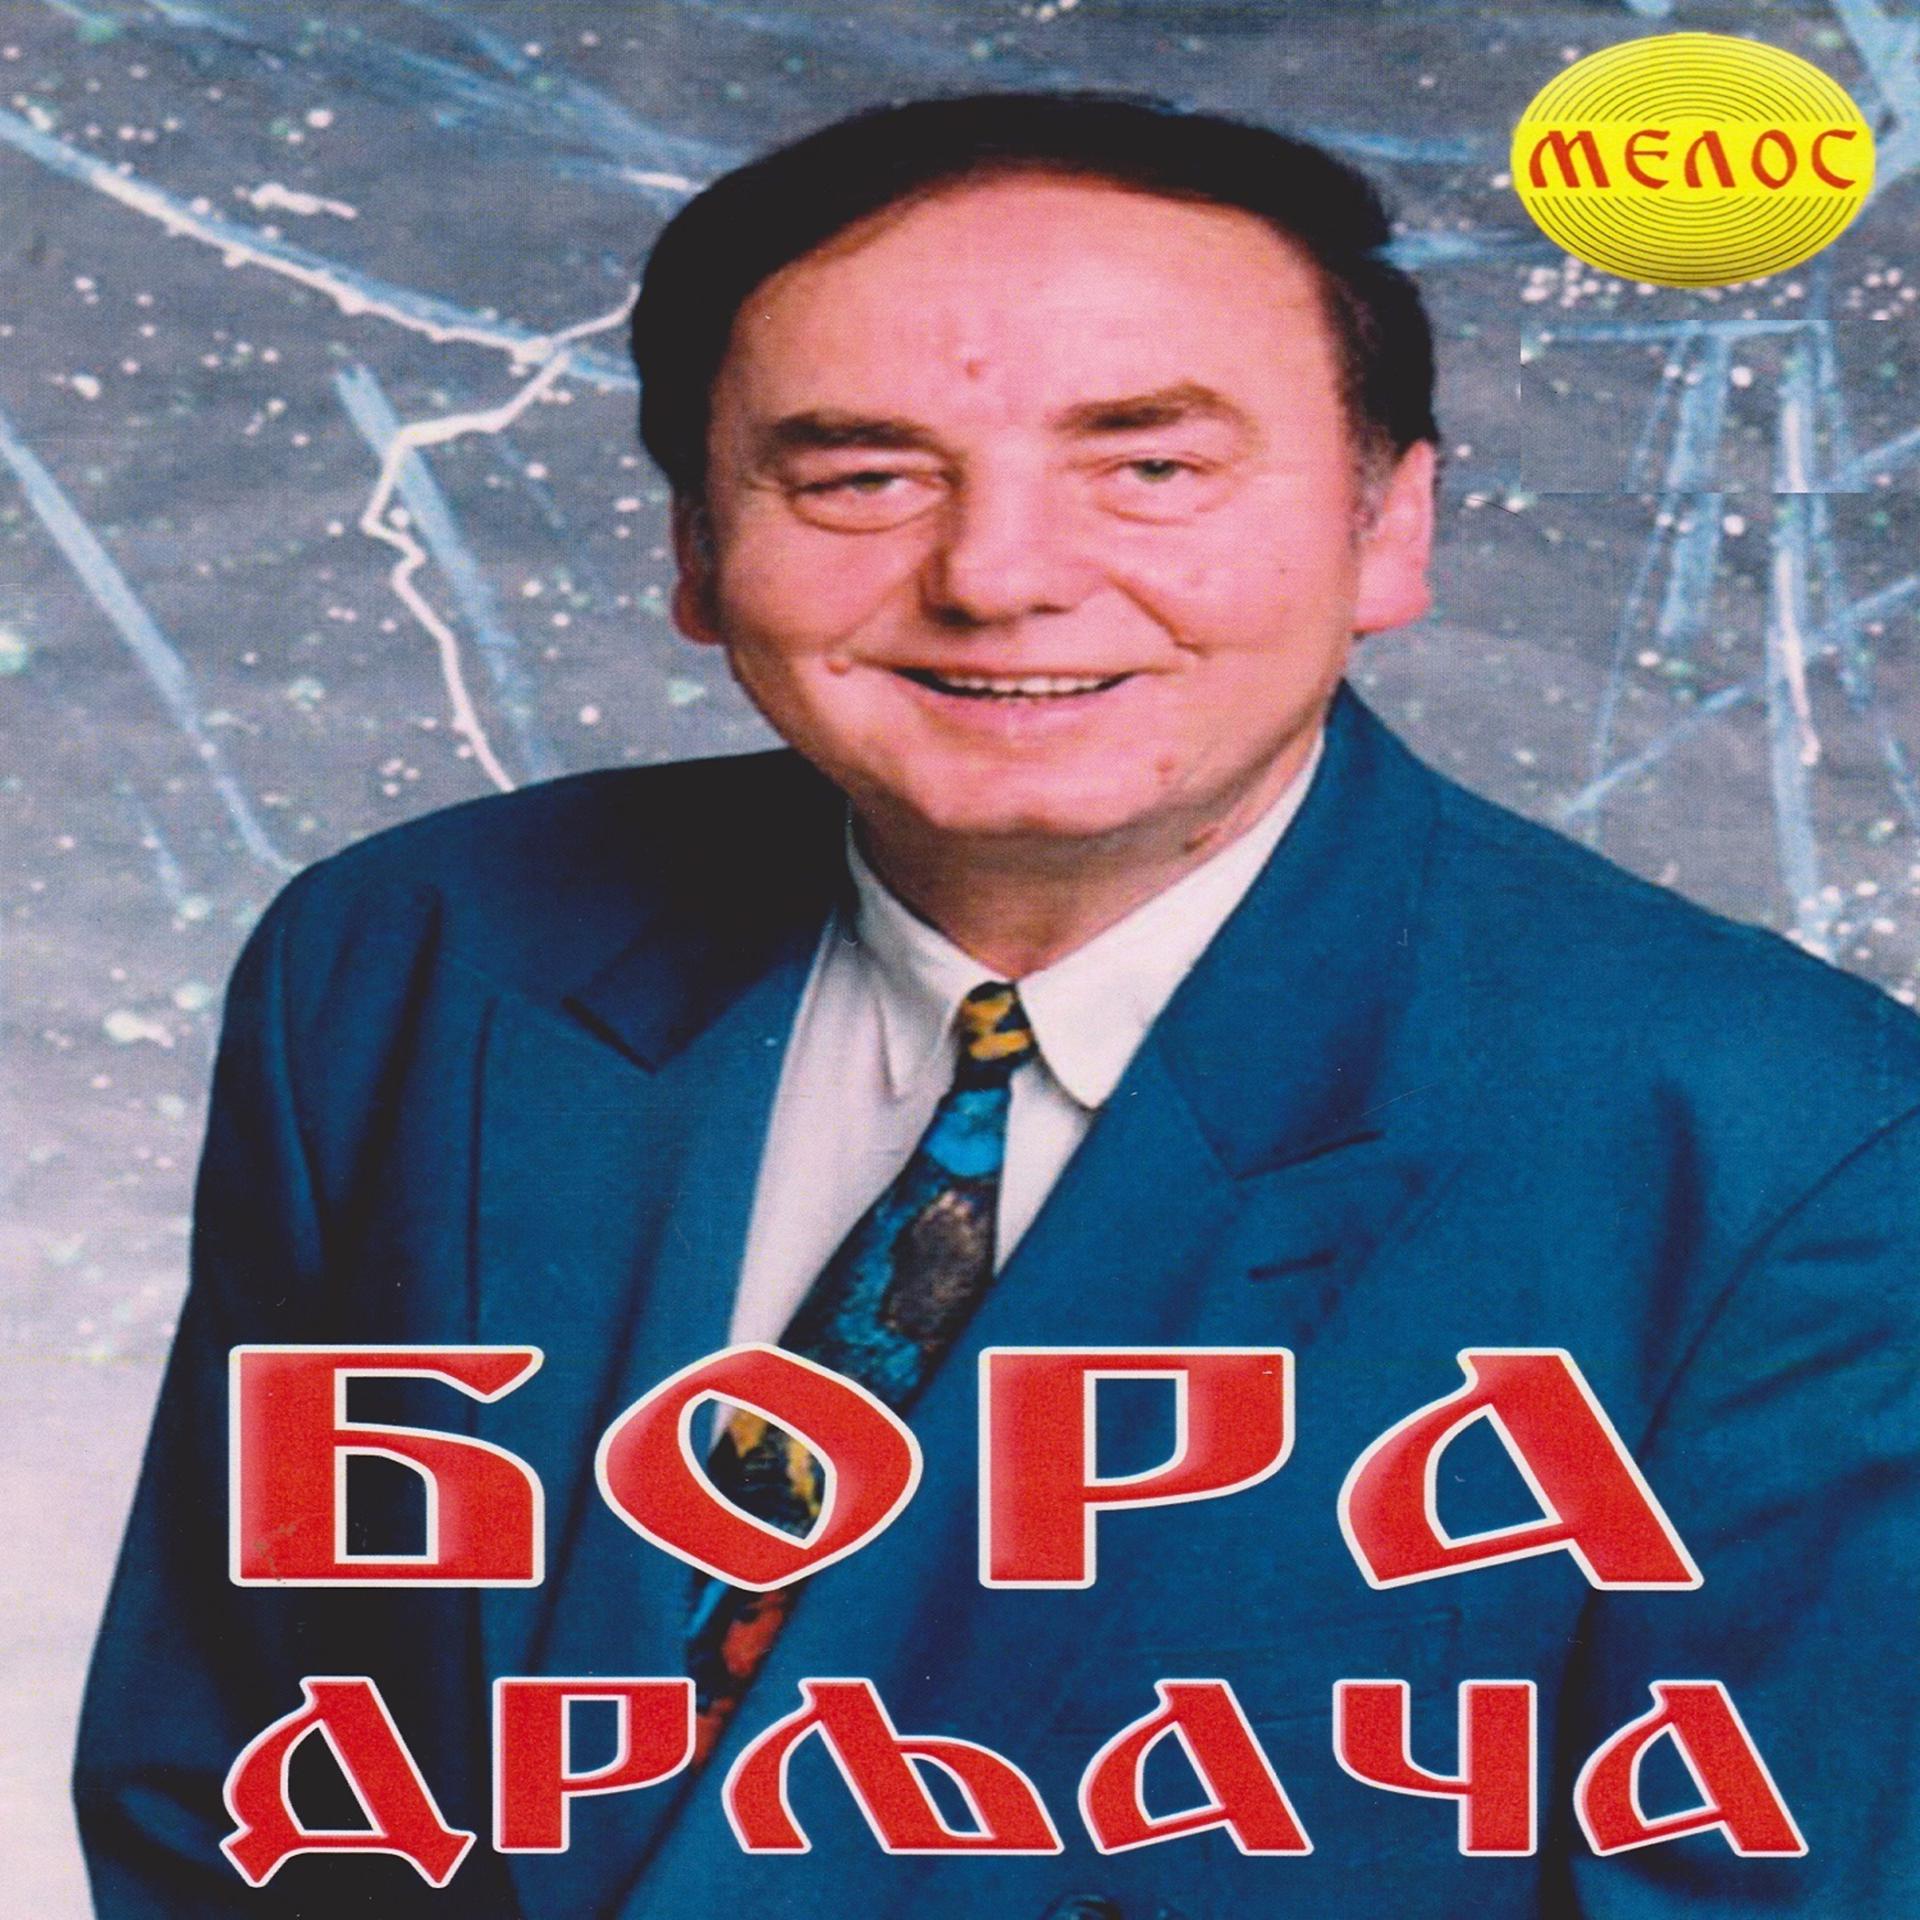 Постер альбома Bora Drljaca